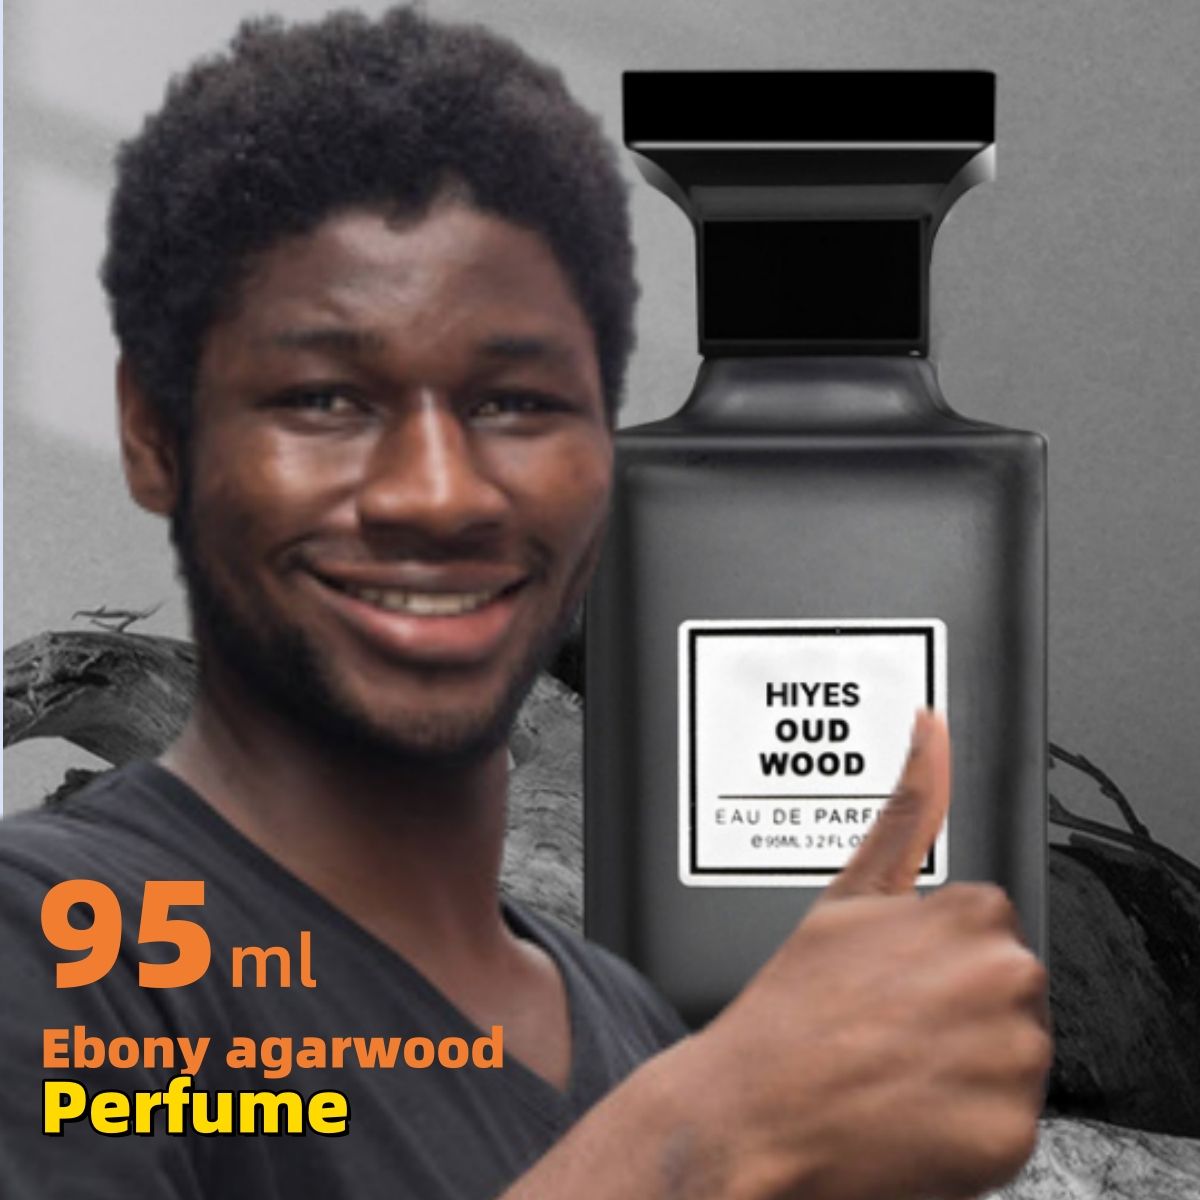 Men's Perfume 95ml ebony agarwood men's perfume Woody and masculine cologne fragrance CRRSHOP beauty care perfume